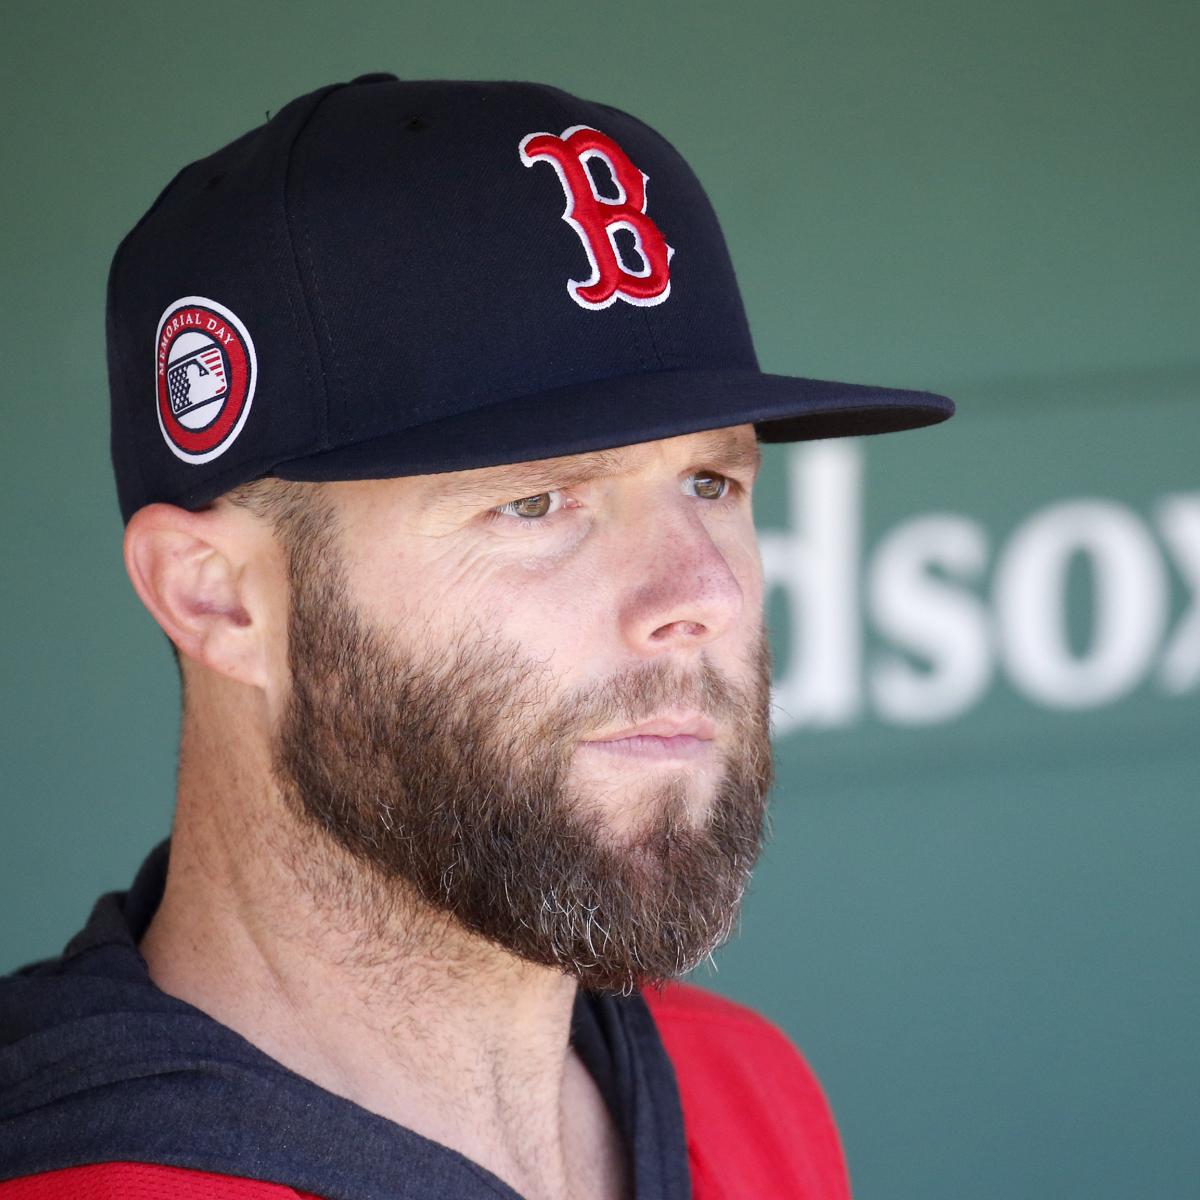 Red Sox cap year of the beard, win World Series